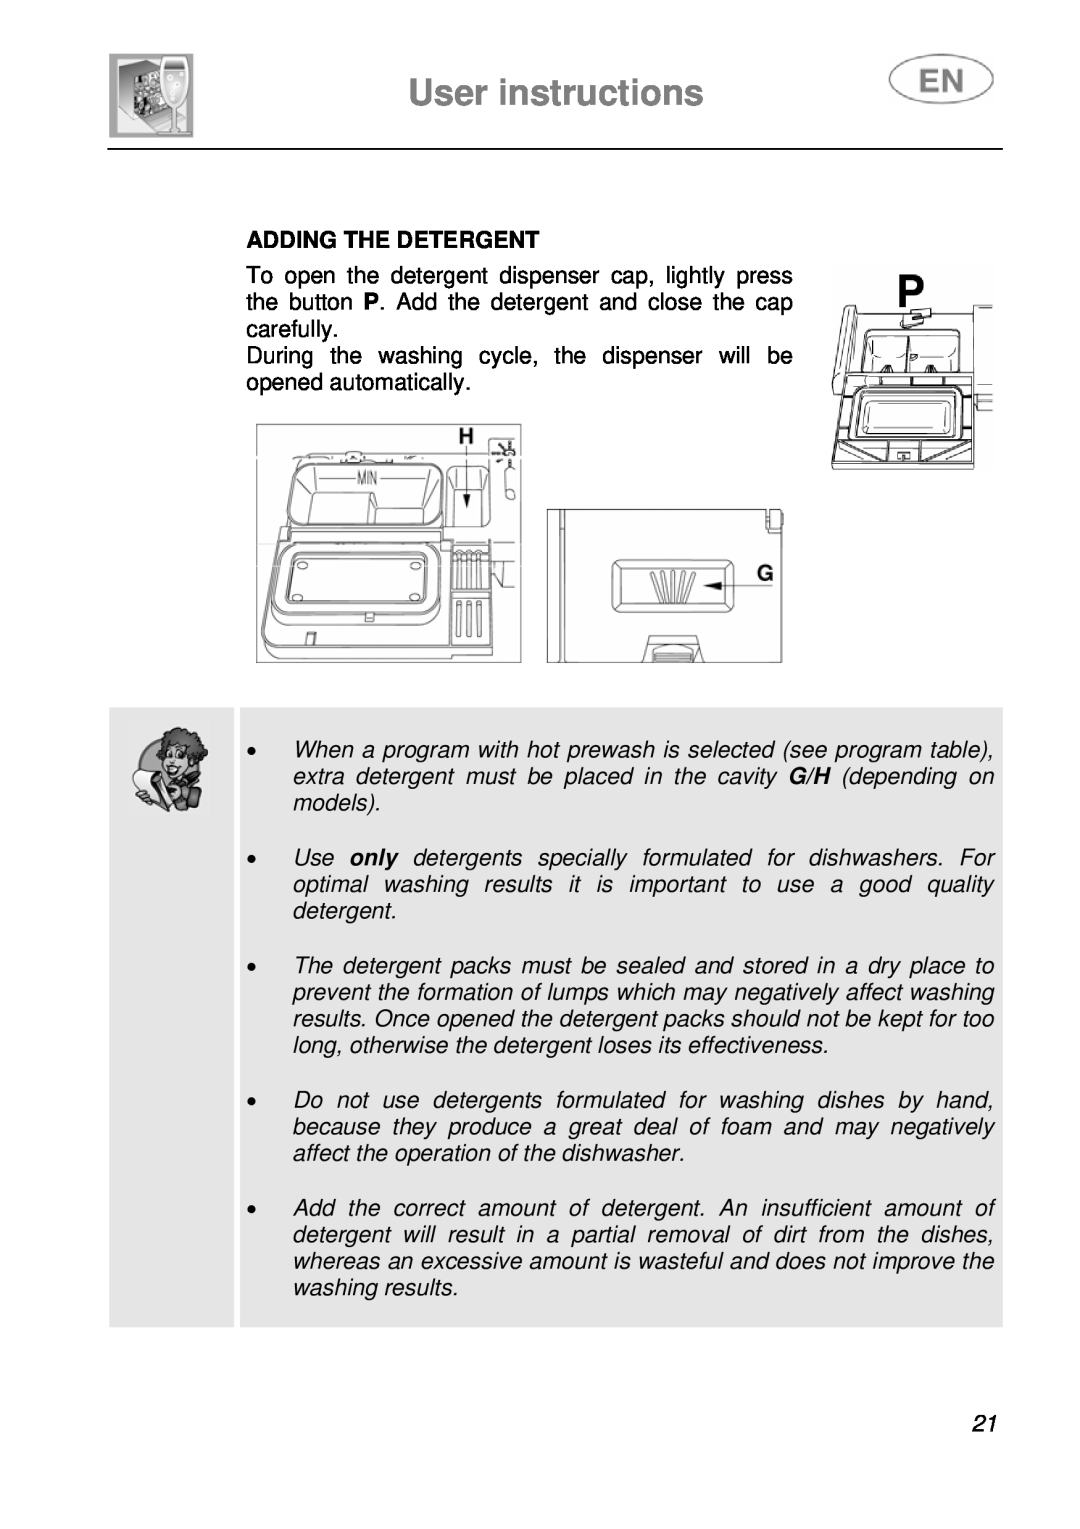 Smeg LSA643XPQ instruction manual User instructions, Adding The Detergent 